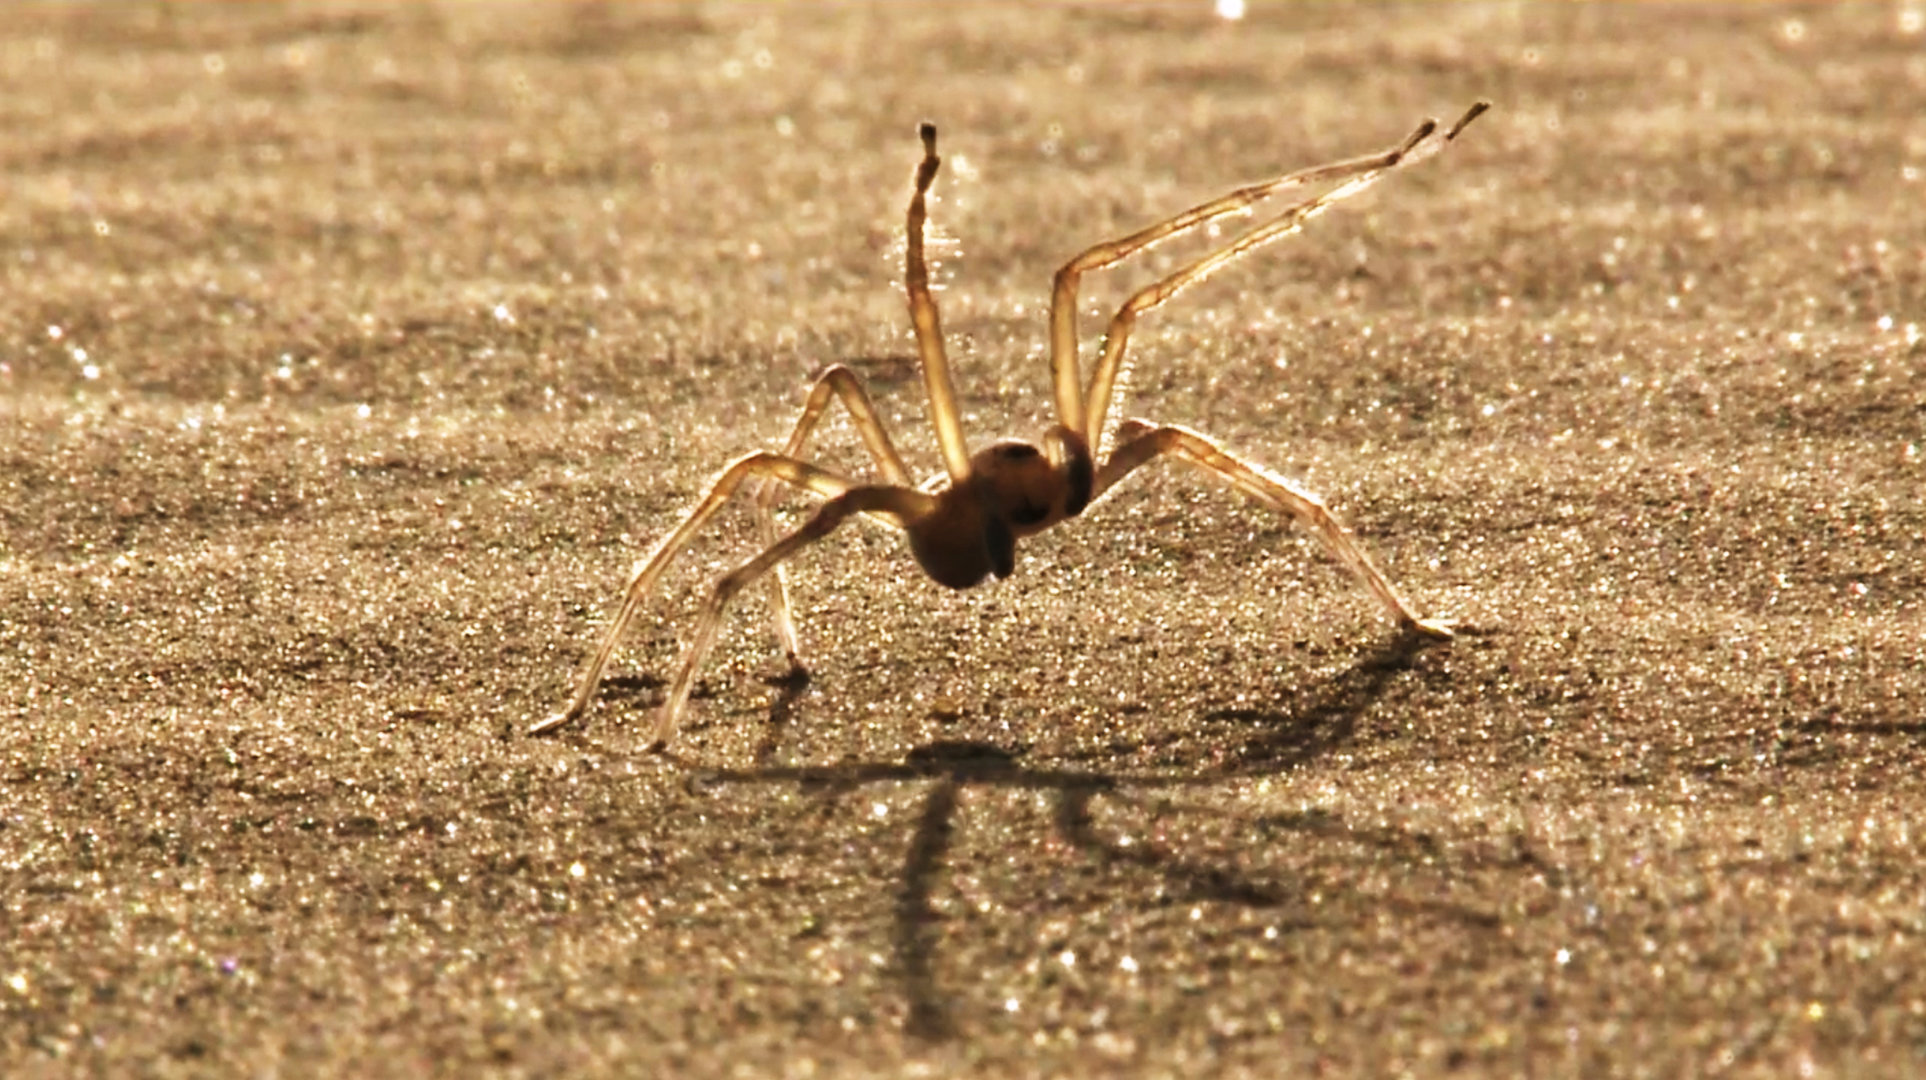 ScienceTake | Tumbling Spider - Video - NYTimes.com